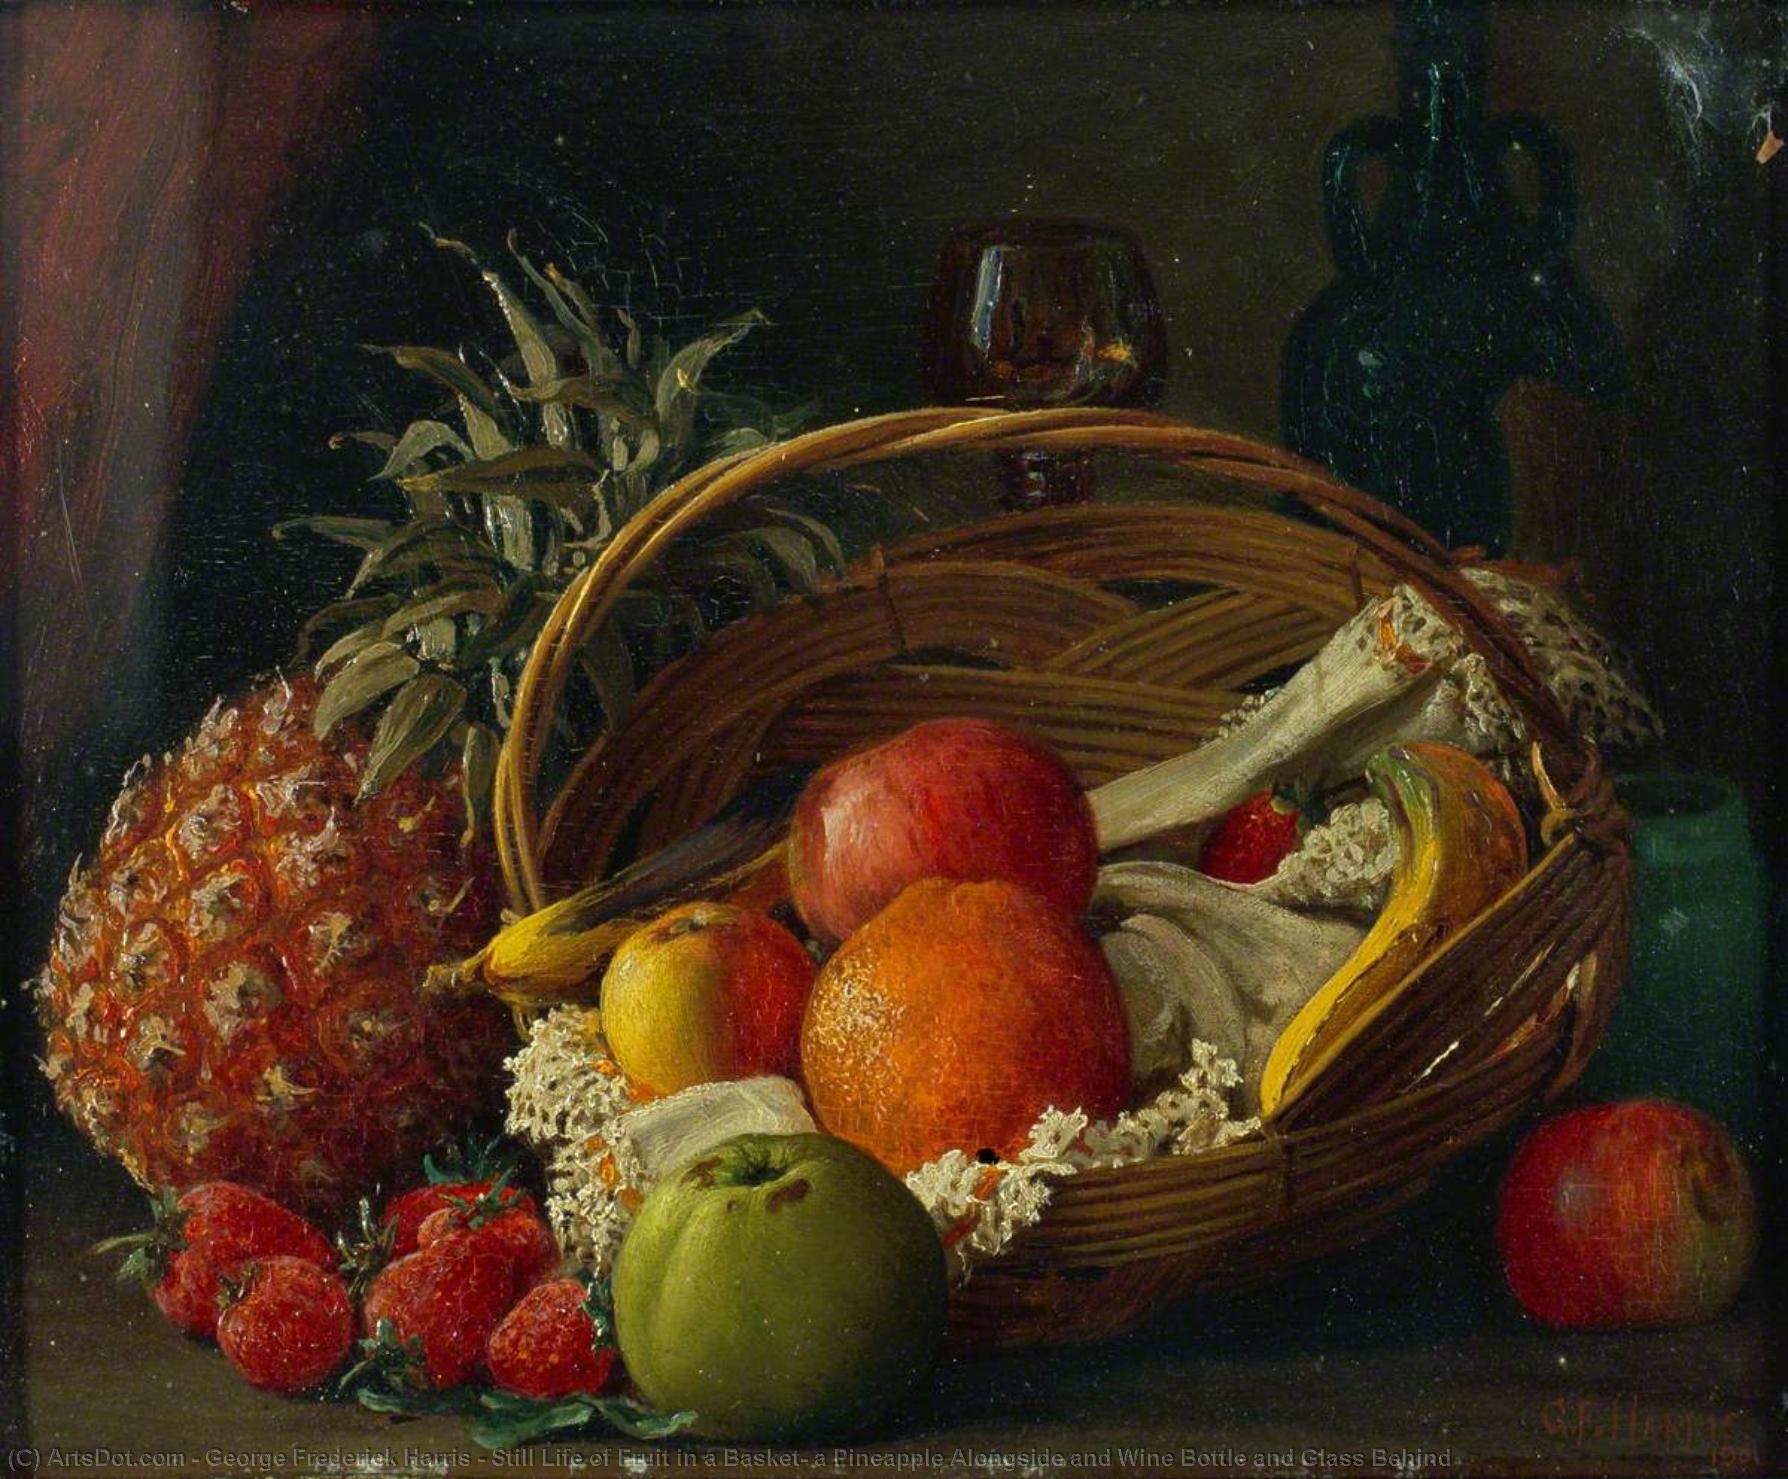 WikiOO.org - Encyclopedia of Fine Arts - Målning, konstverk George Frederick Harris - Still Life of Fruit in a Basket, a Pineapple Alongside and Wine Bottle and Glass Behind